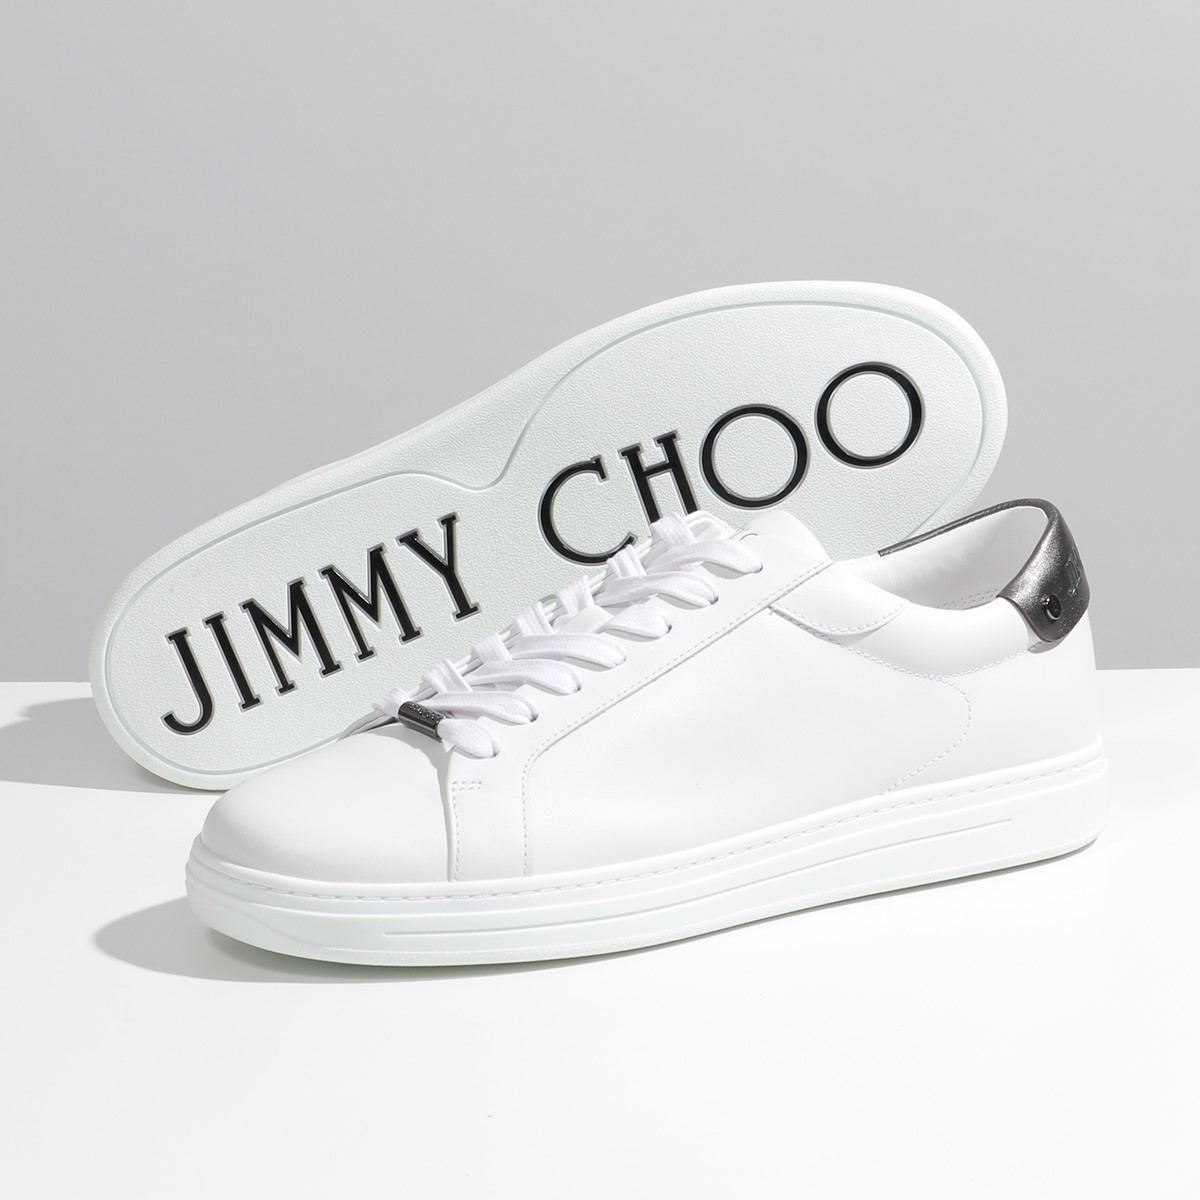 Jimmy Choo ジミーチュウ スニーカー ROME/M AZA メンズ ローカット レザー ロゴ シューズ 靴 カラー2色